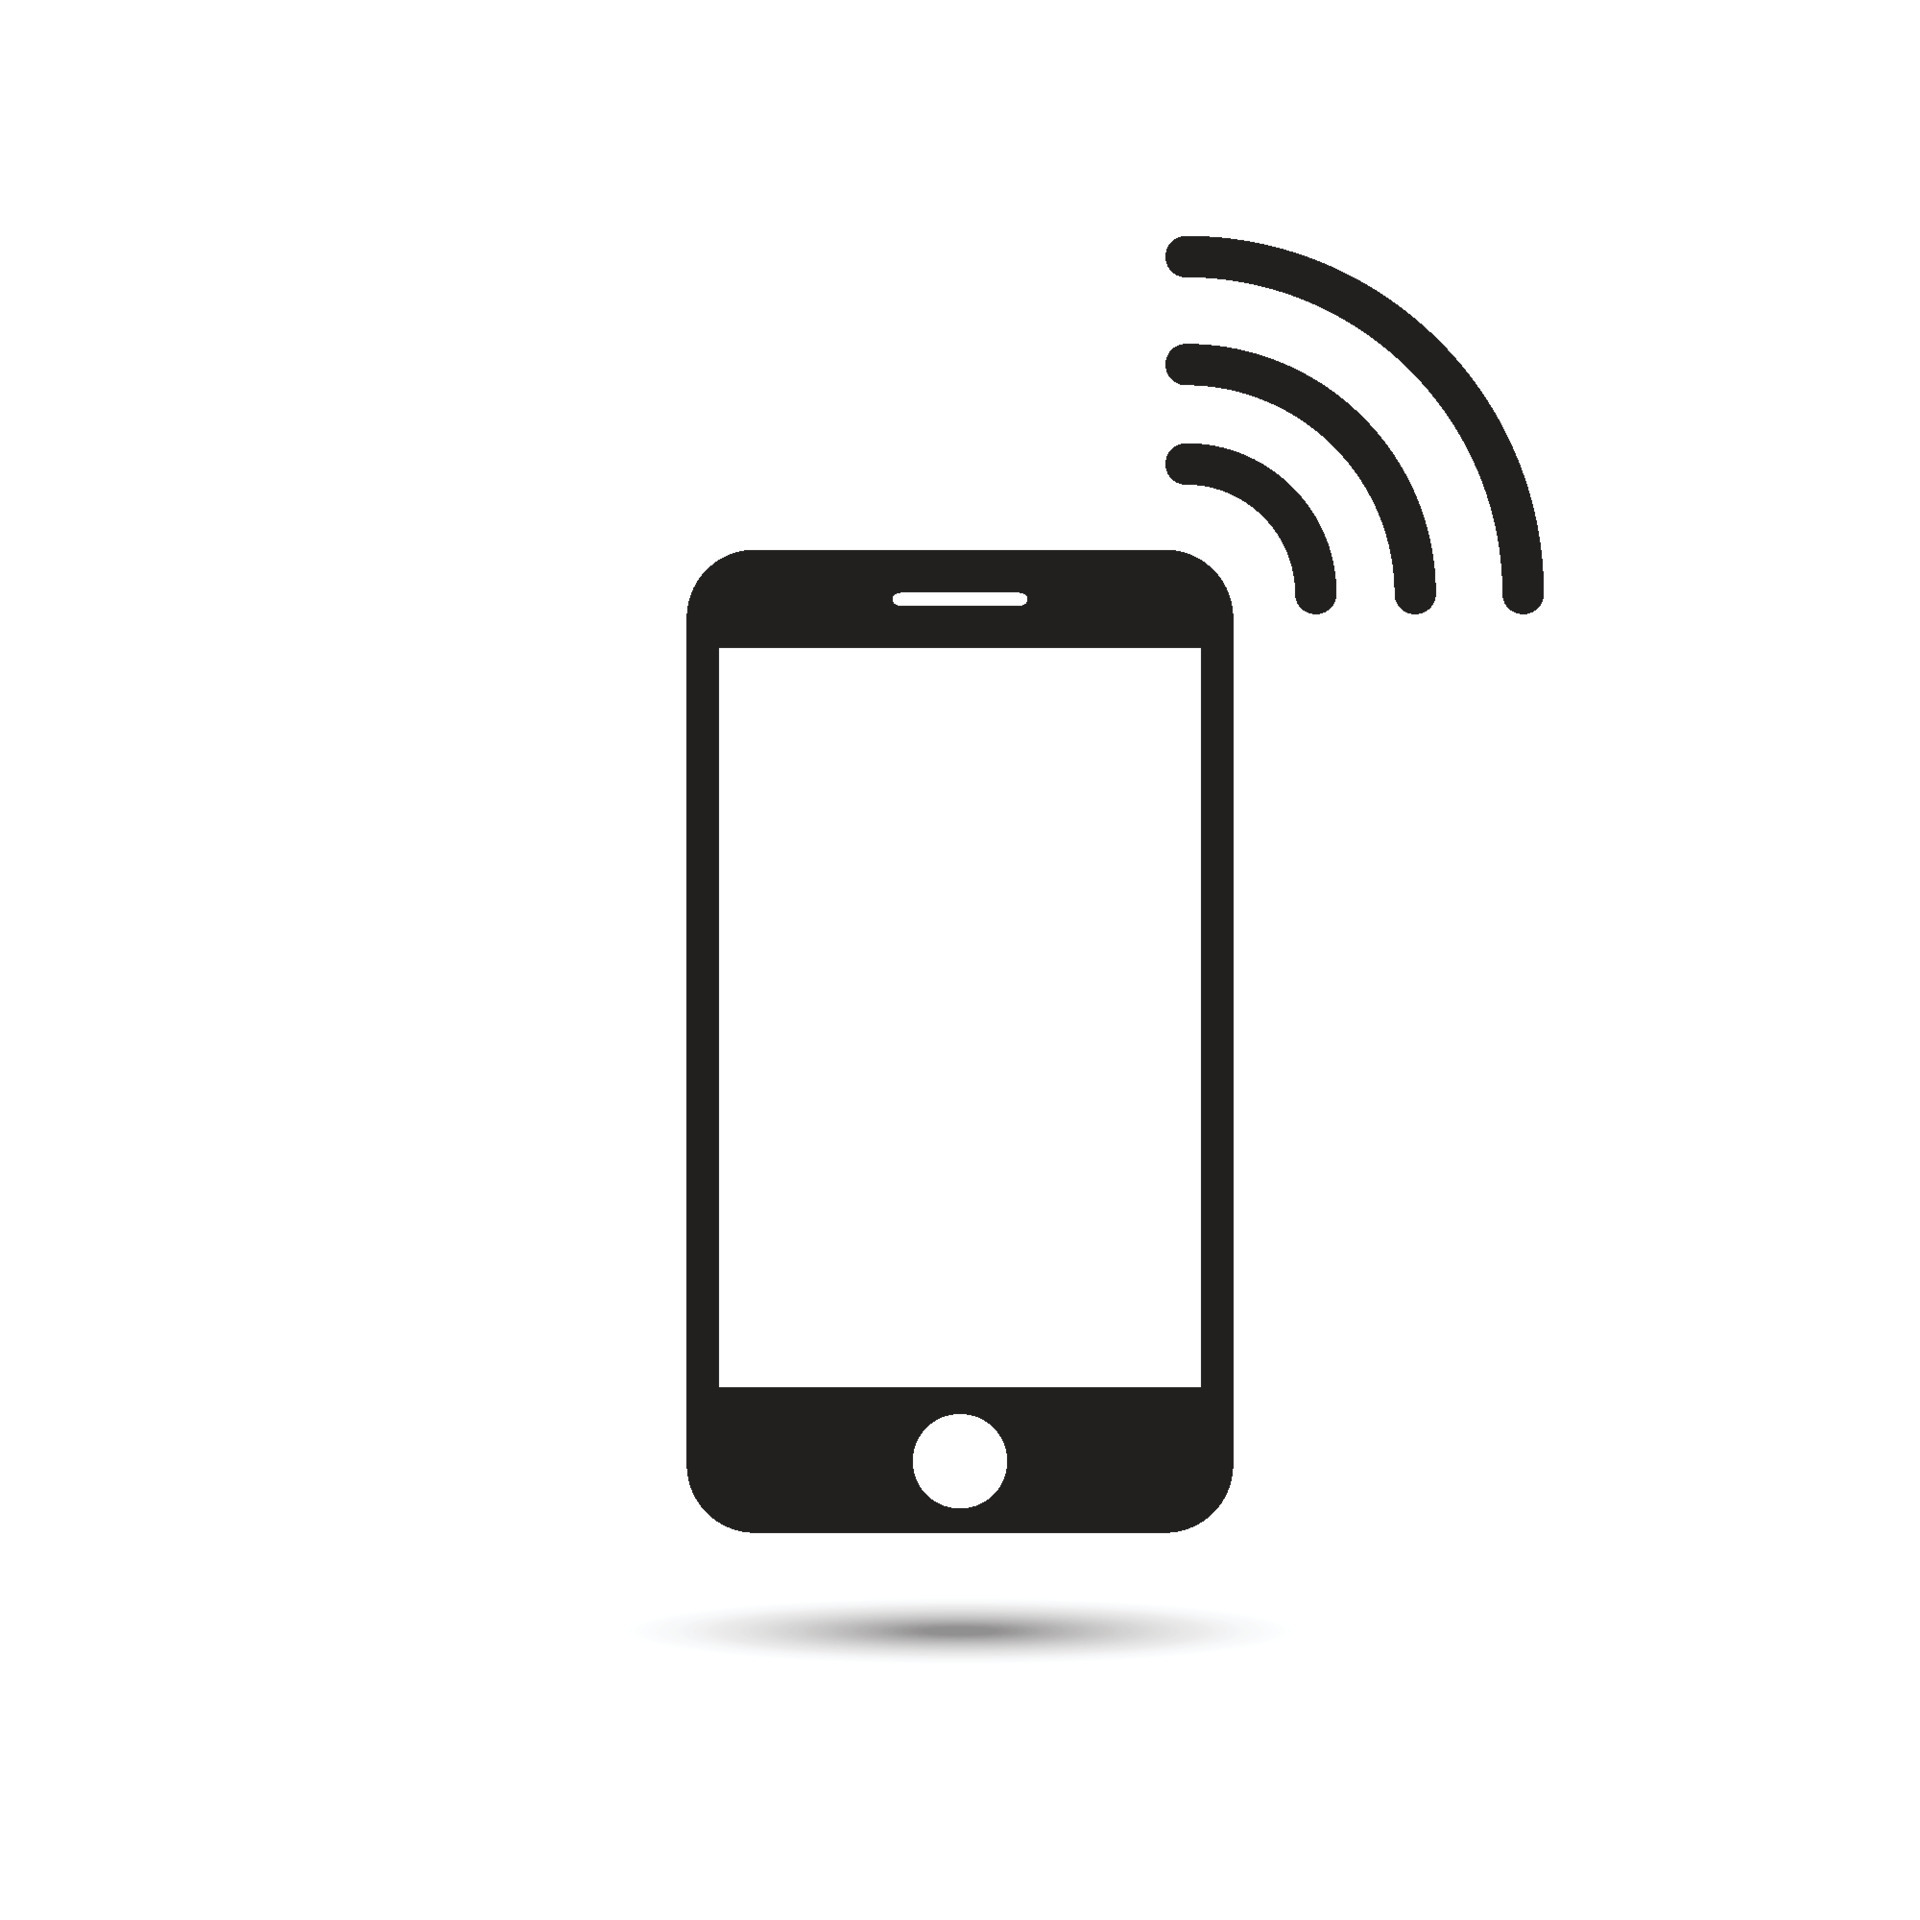 icono de teléfono inteligente en un moderno estilo plano aislado en fondo  blanco. pictograma de teléfono